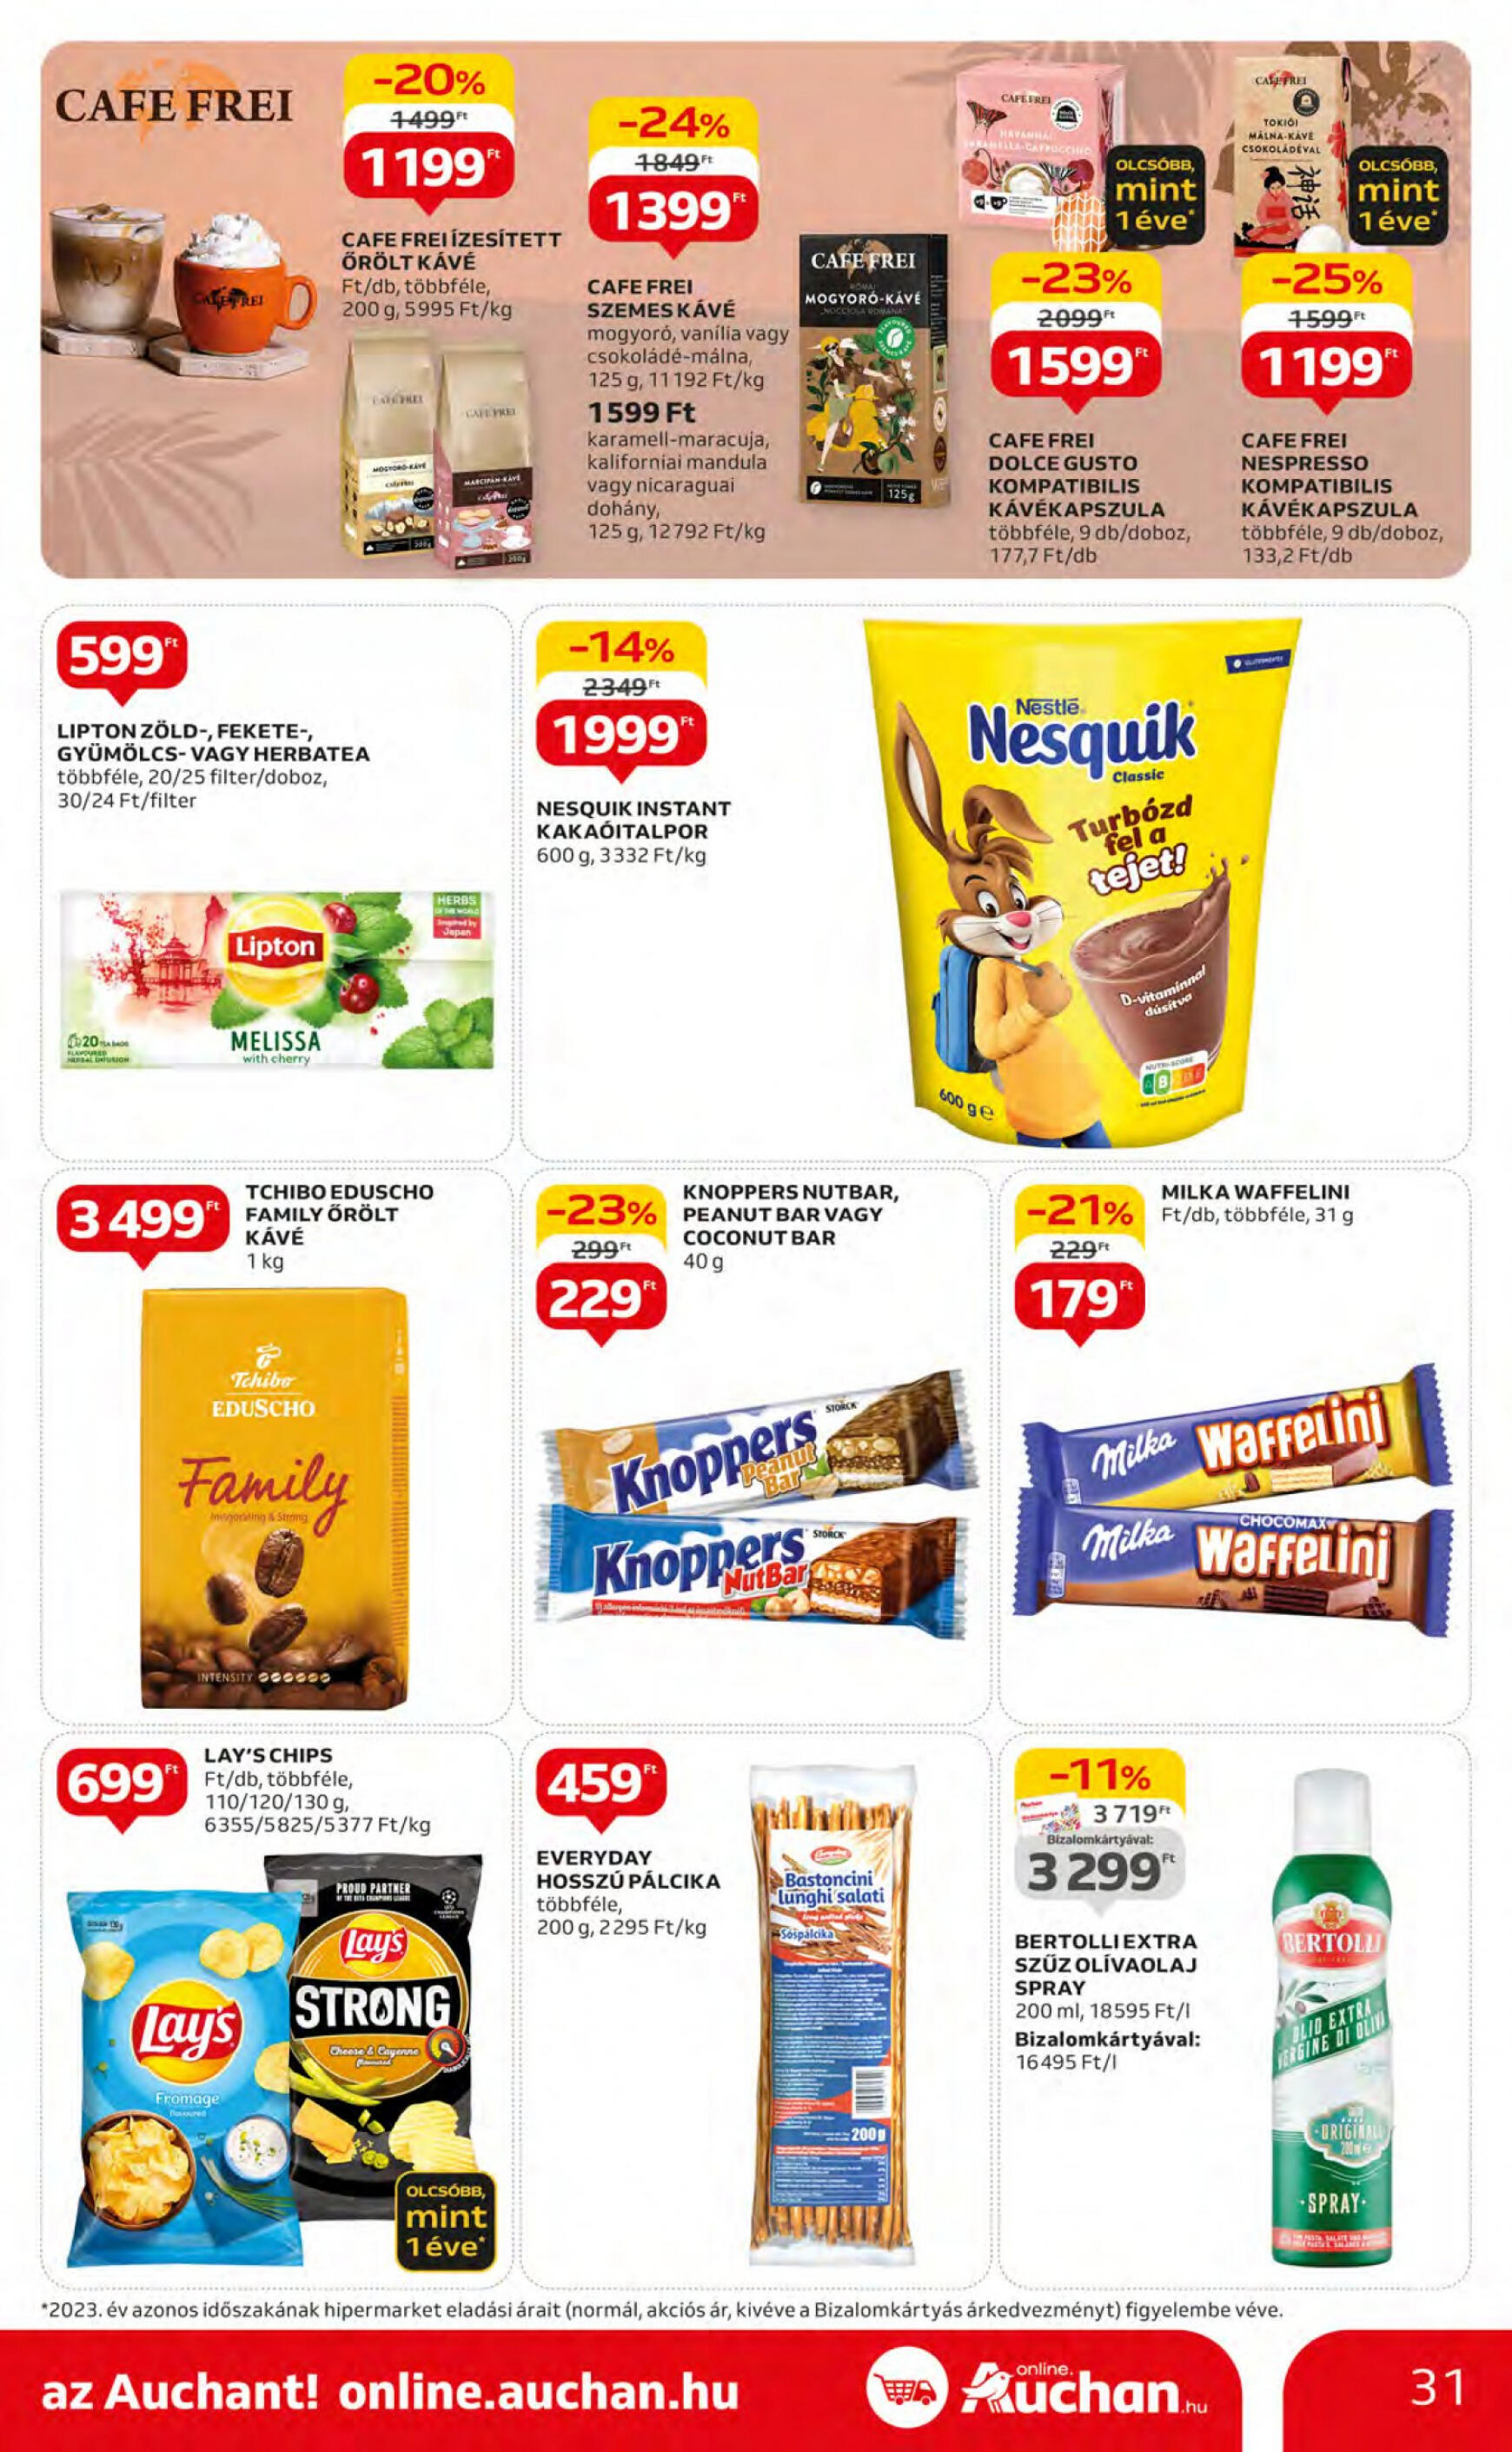 auchan - Aktuális újság Auchan 05.09. - 05.15. - page: 31